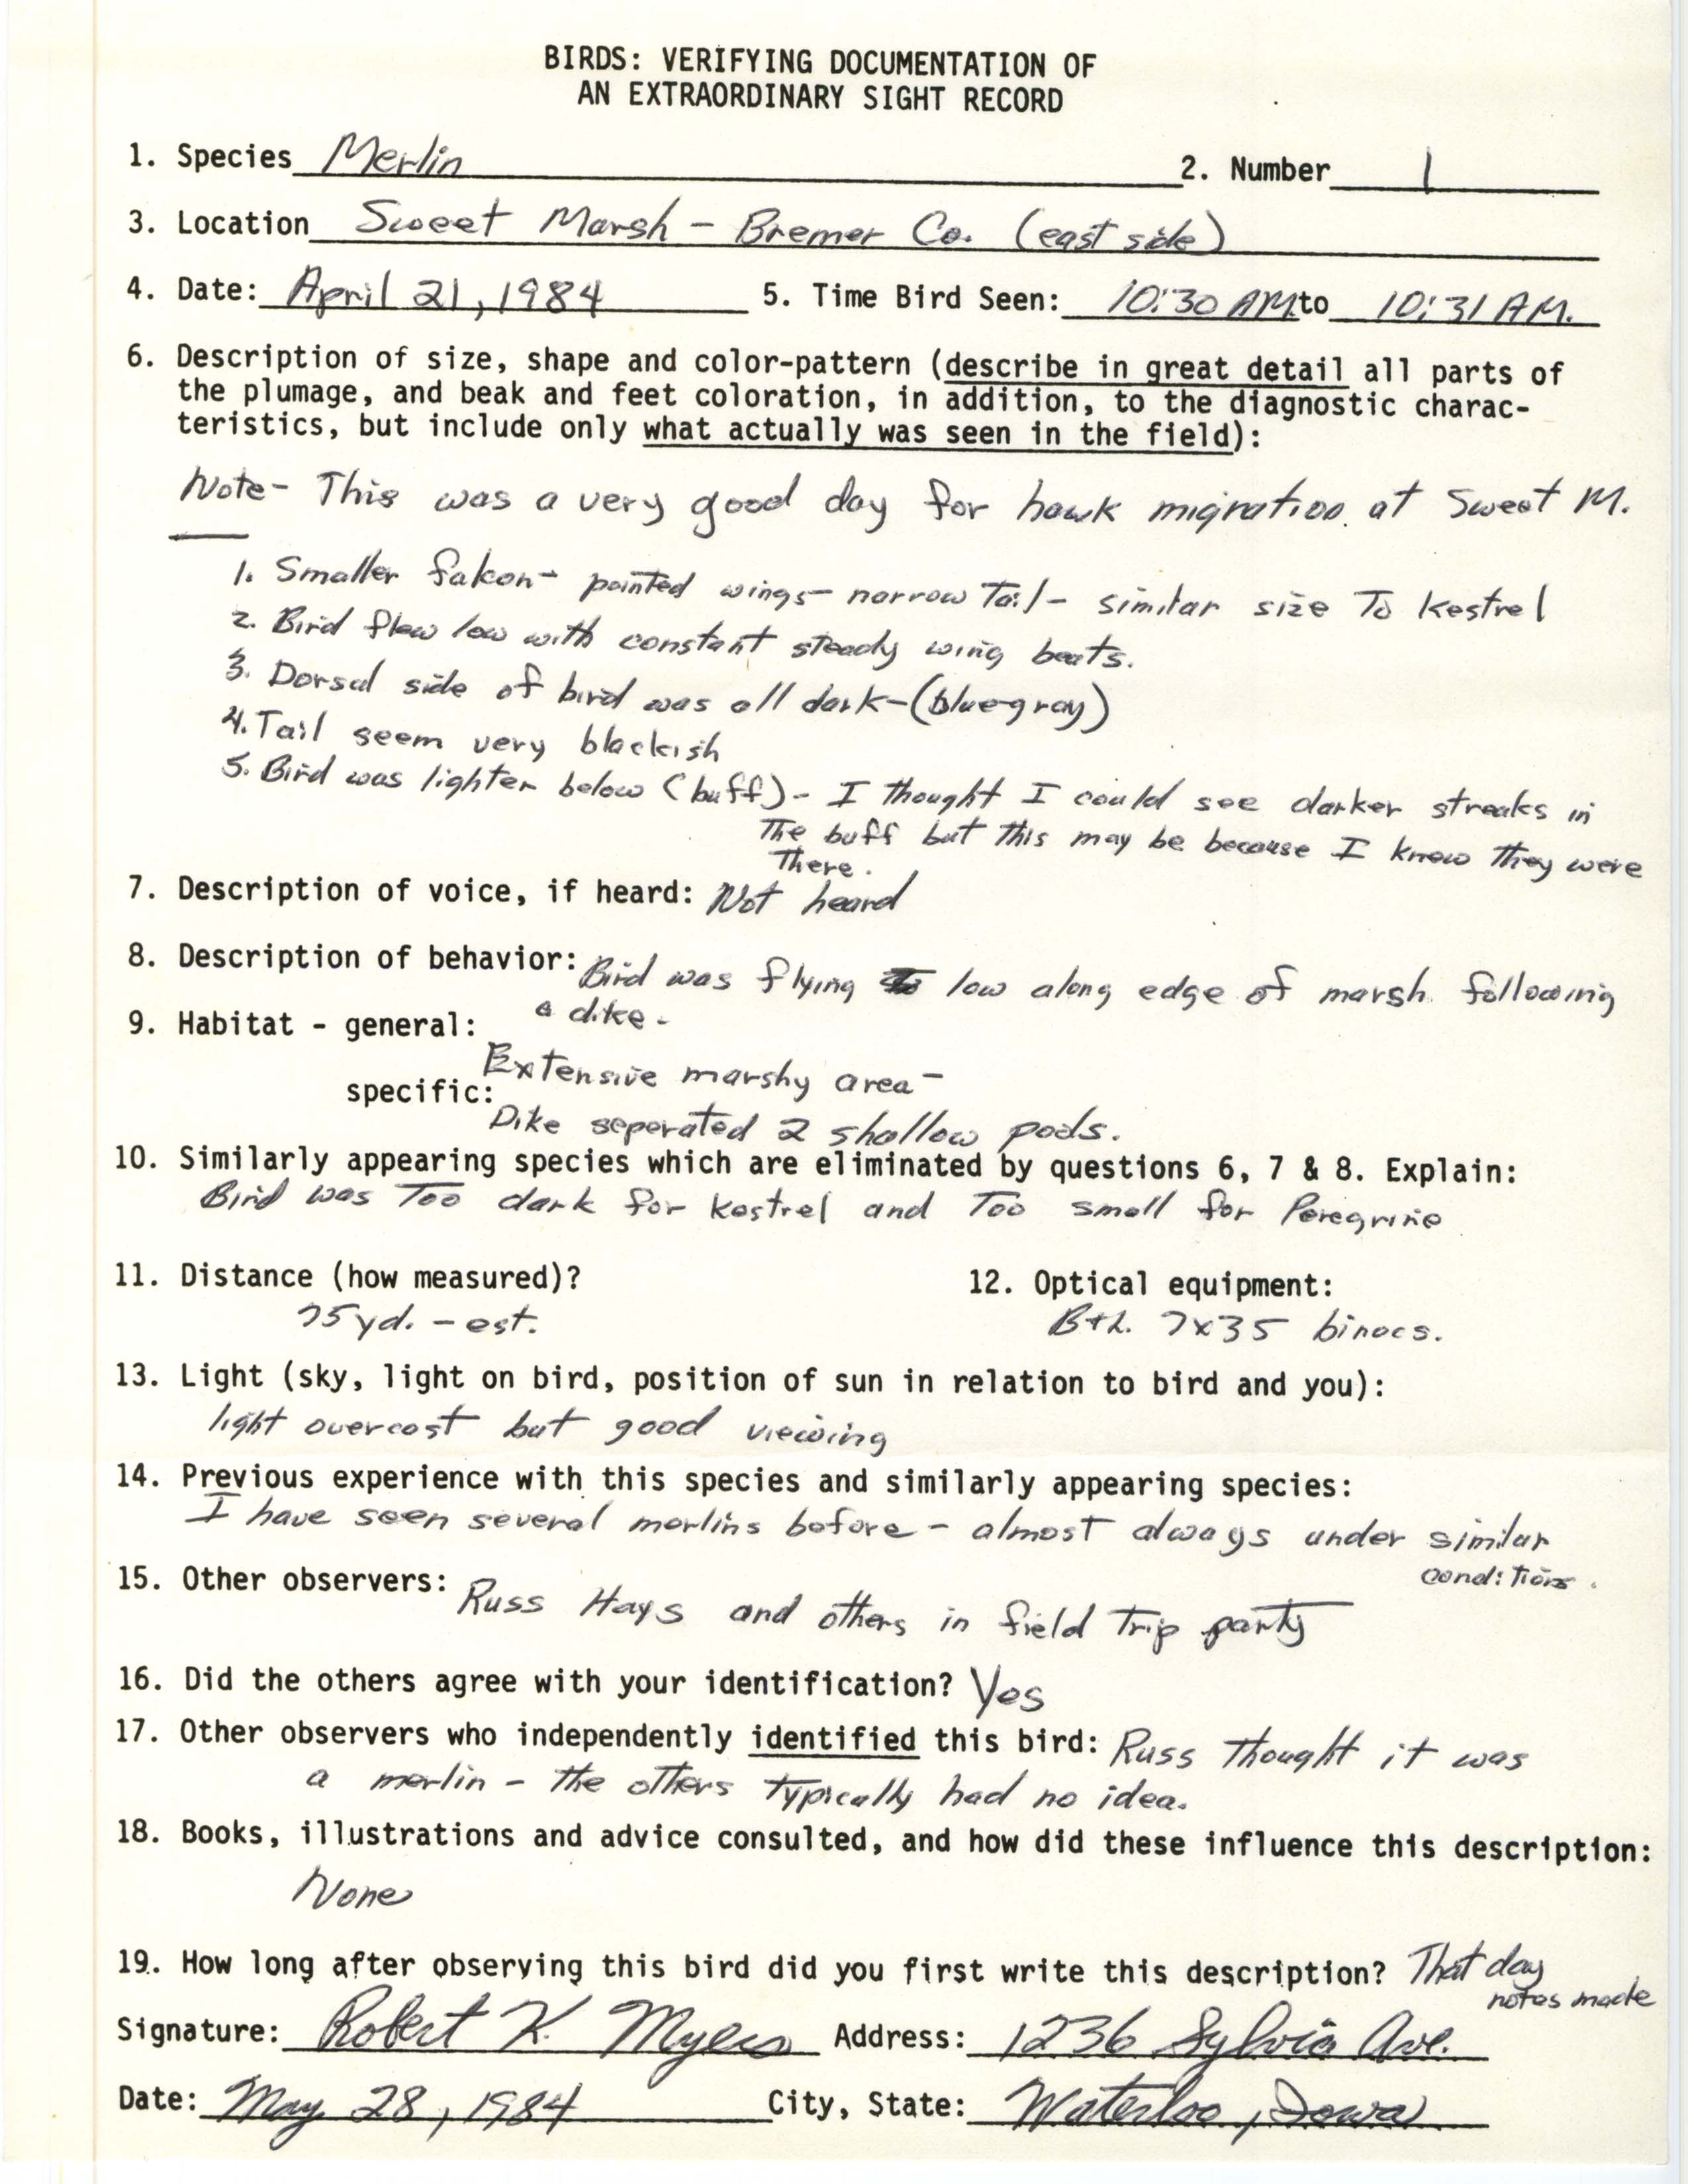 Rare bird documentation form for Merlin at Sweet Marsh, 1984